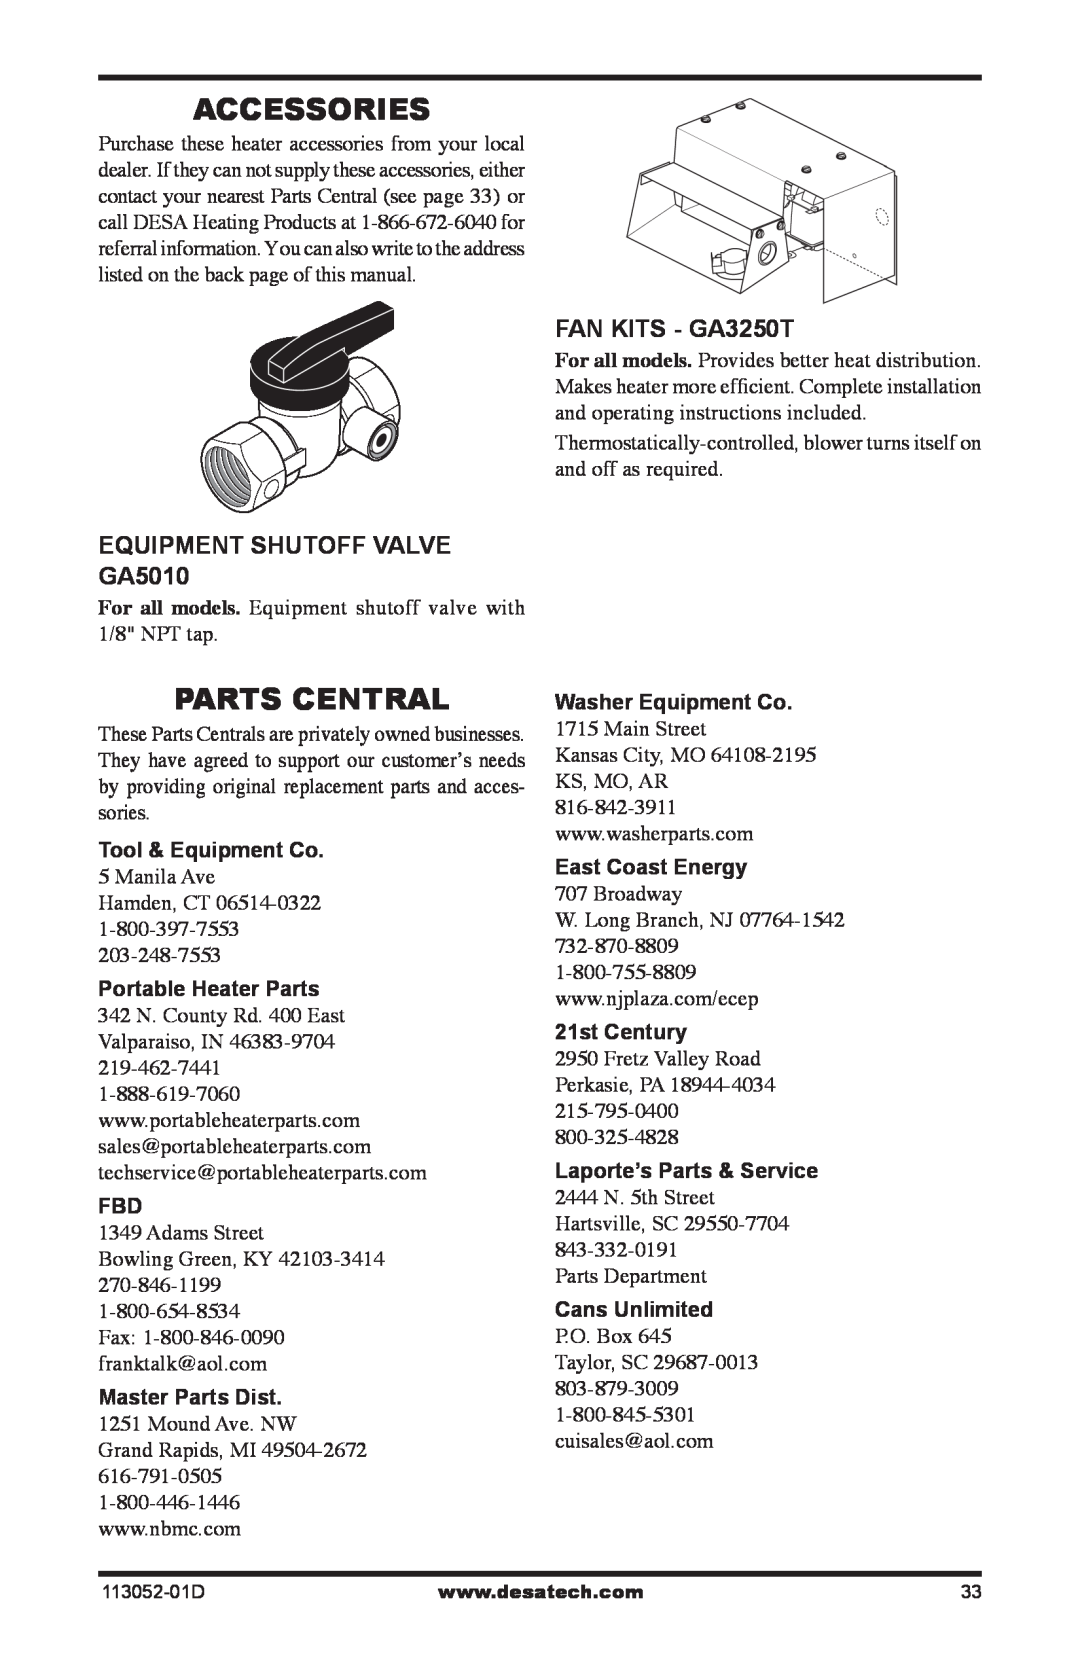 Desa VP16ITA FAN KITS - GA3250T, EQUIPMENT SHUTOFF VALVE GA5010, Tool & Equipment Co, Portable Heater Parts, 21st Century 